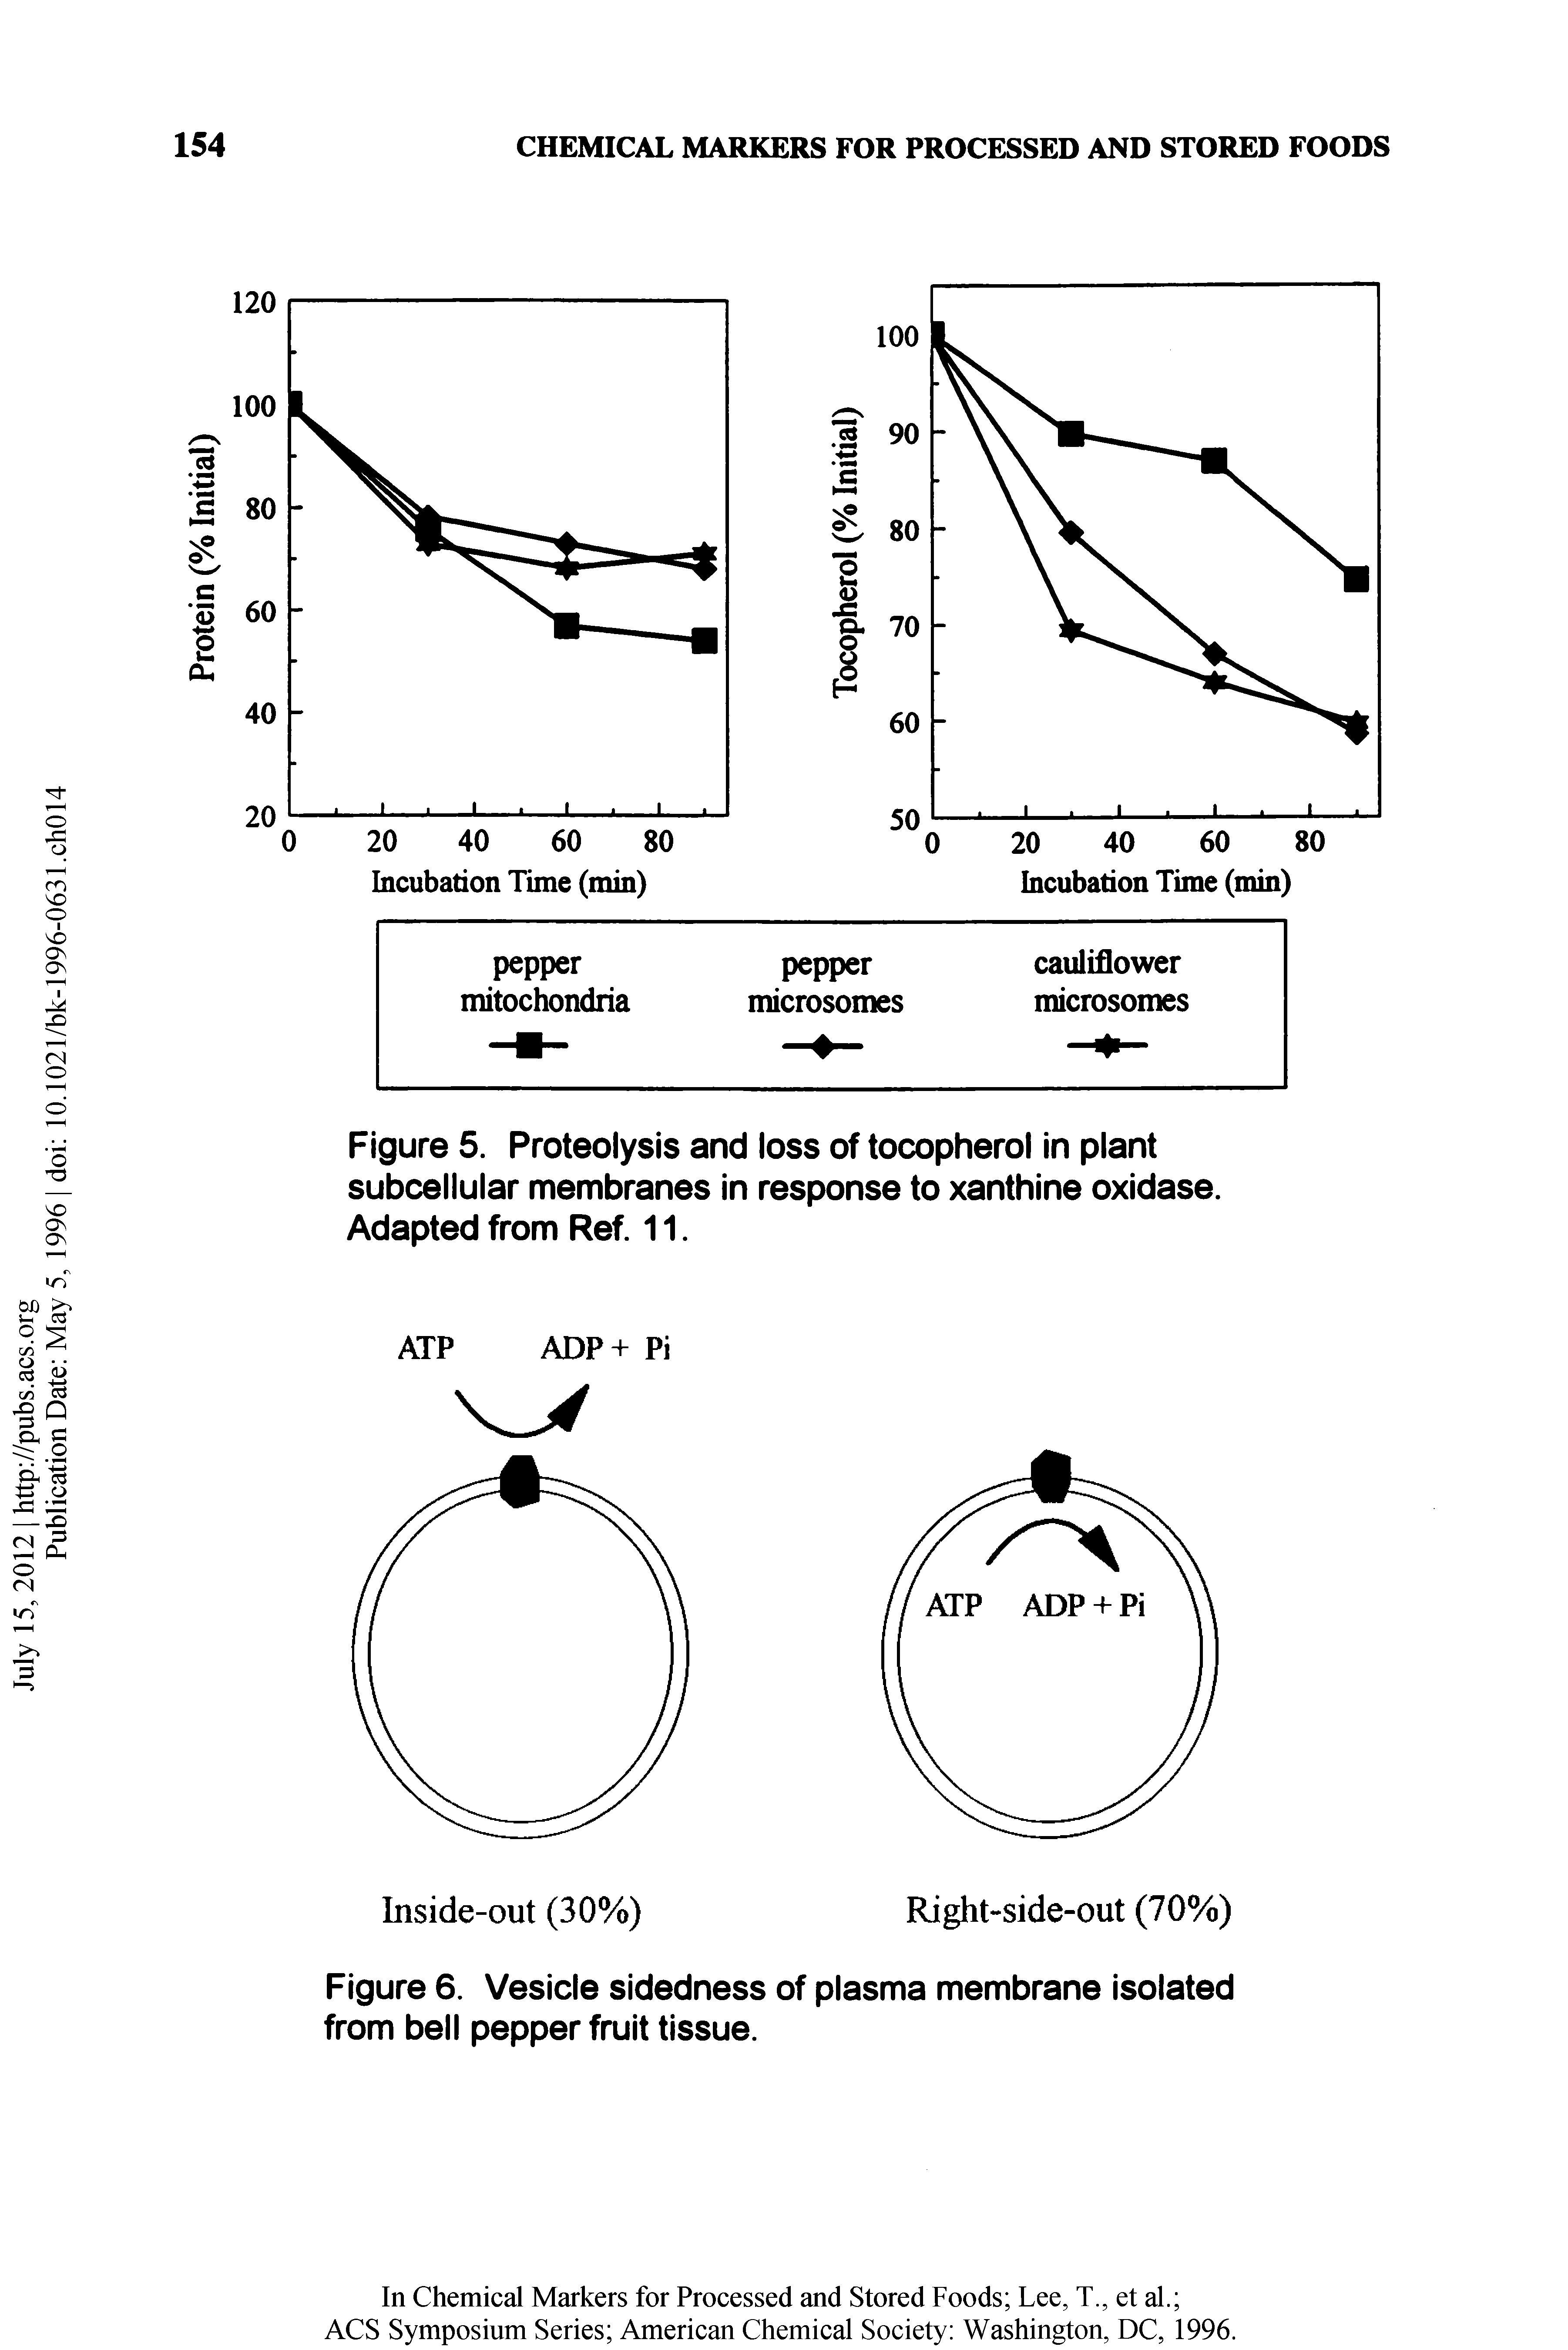 Figure 6. Vesicle sidedness of plasma membrane isolated from bell pepper fruit tissue.